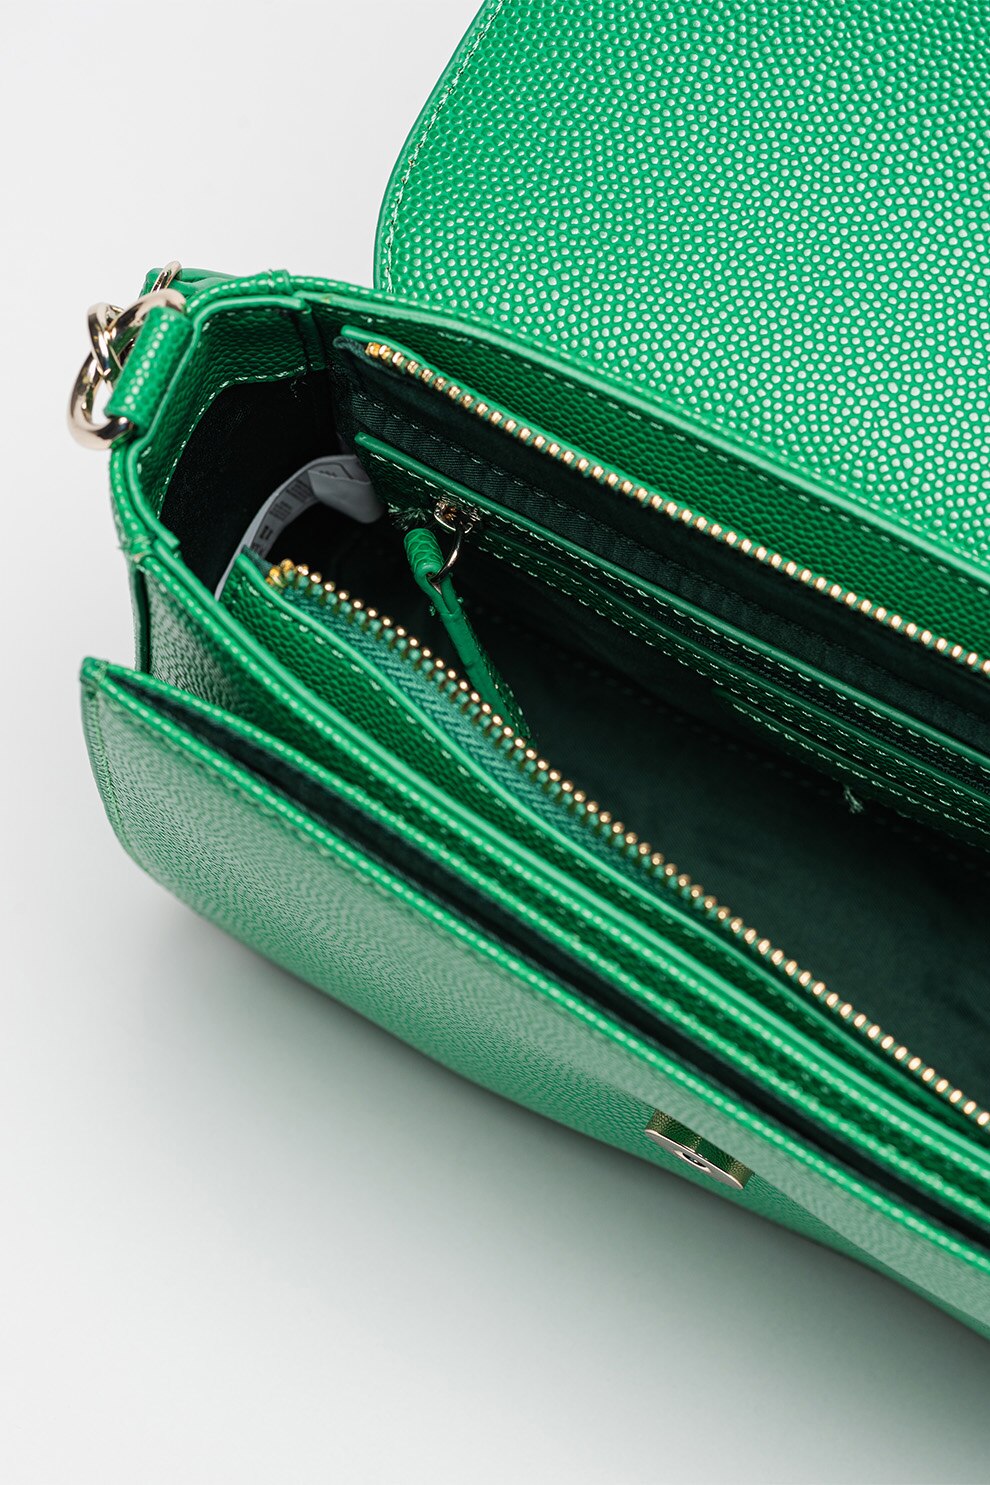 Valentino bags, Divina small clutch in verde